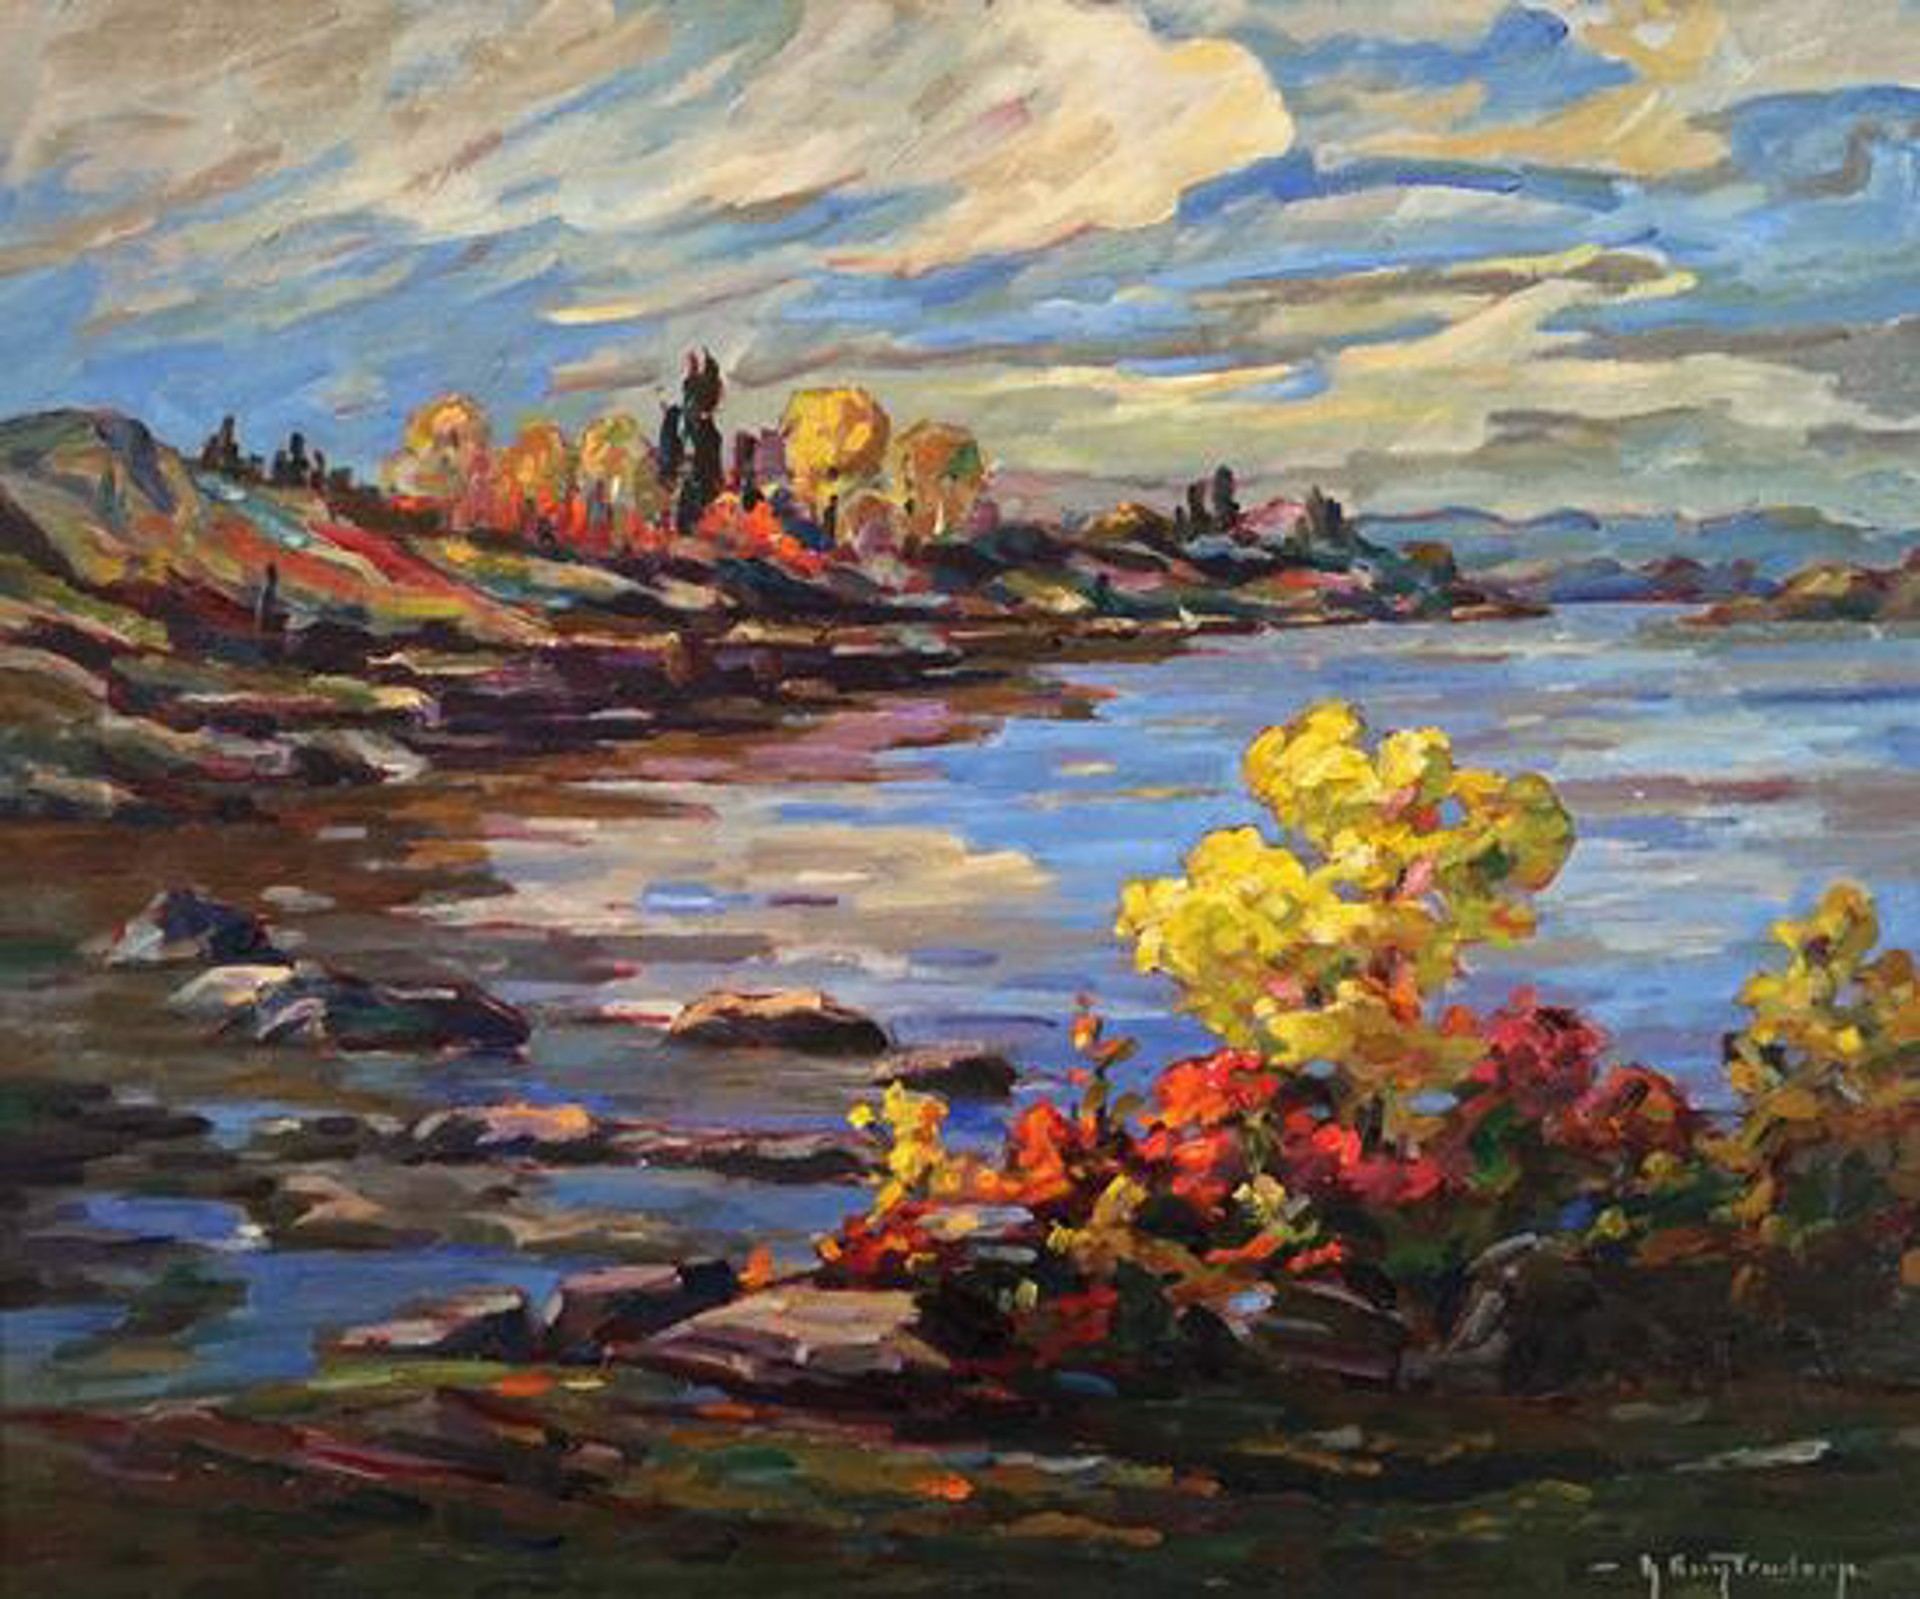 Northern Shoreline by George Buytendorp (1923-2014)